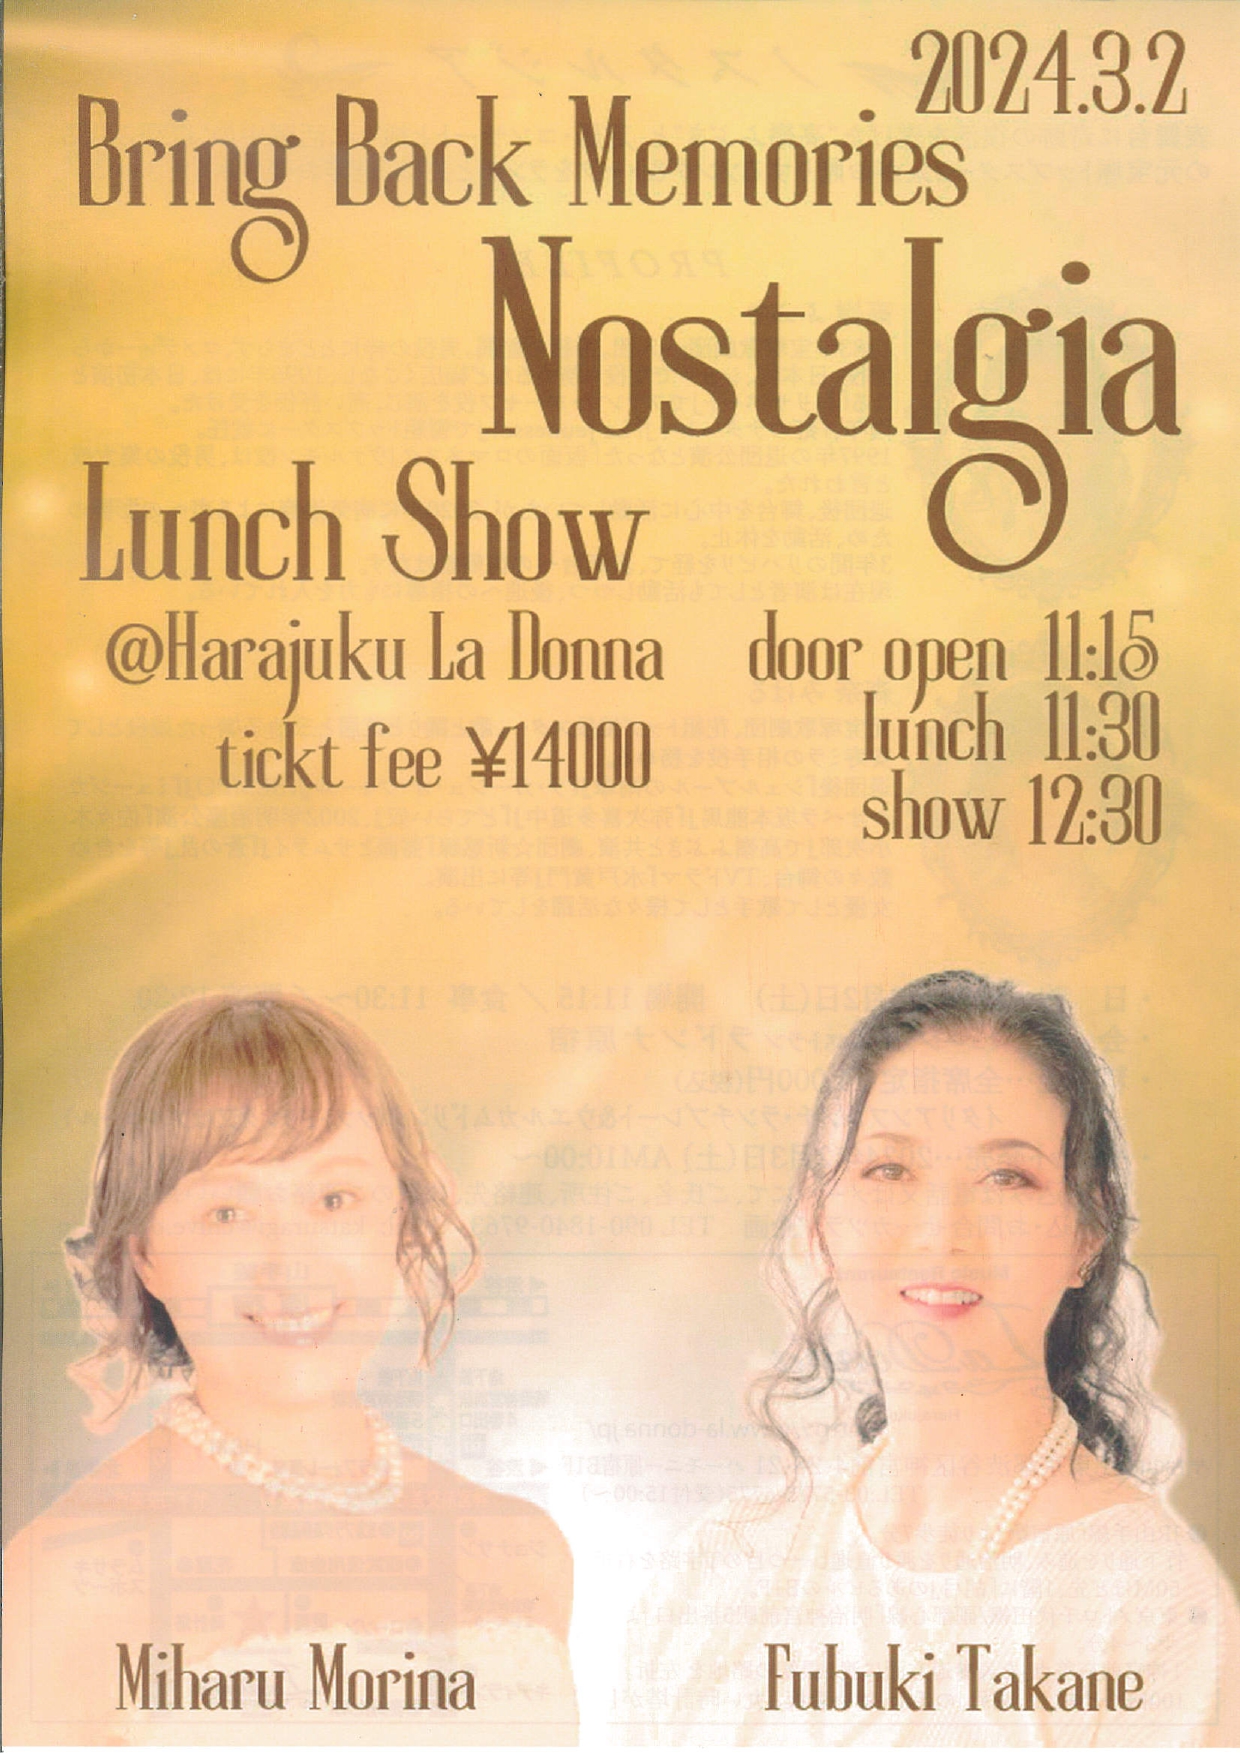 Bring Back Memories Nostalgia Lunch Show @Harajuku La Donna